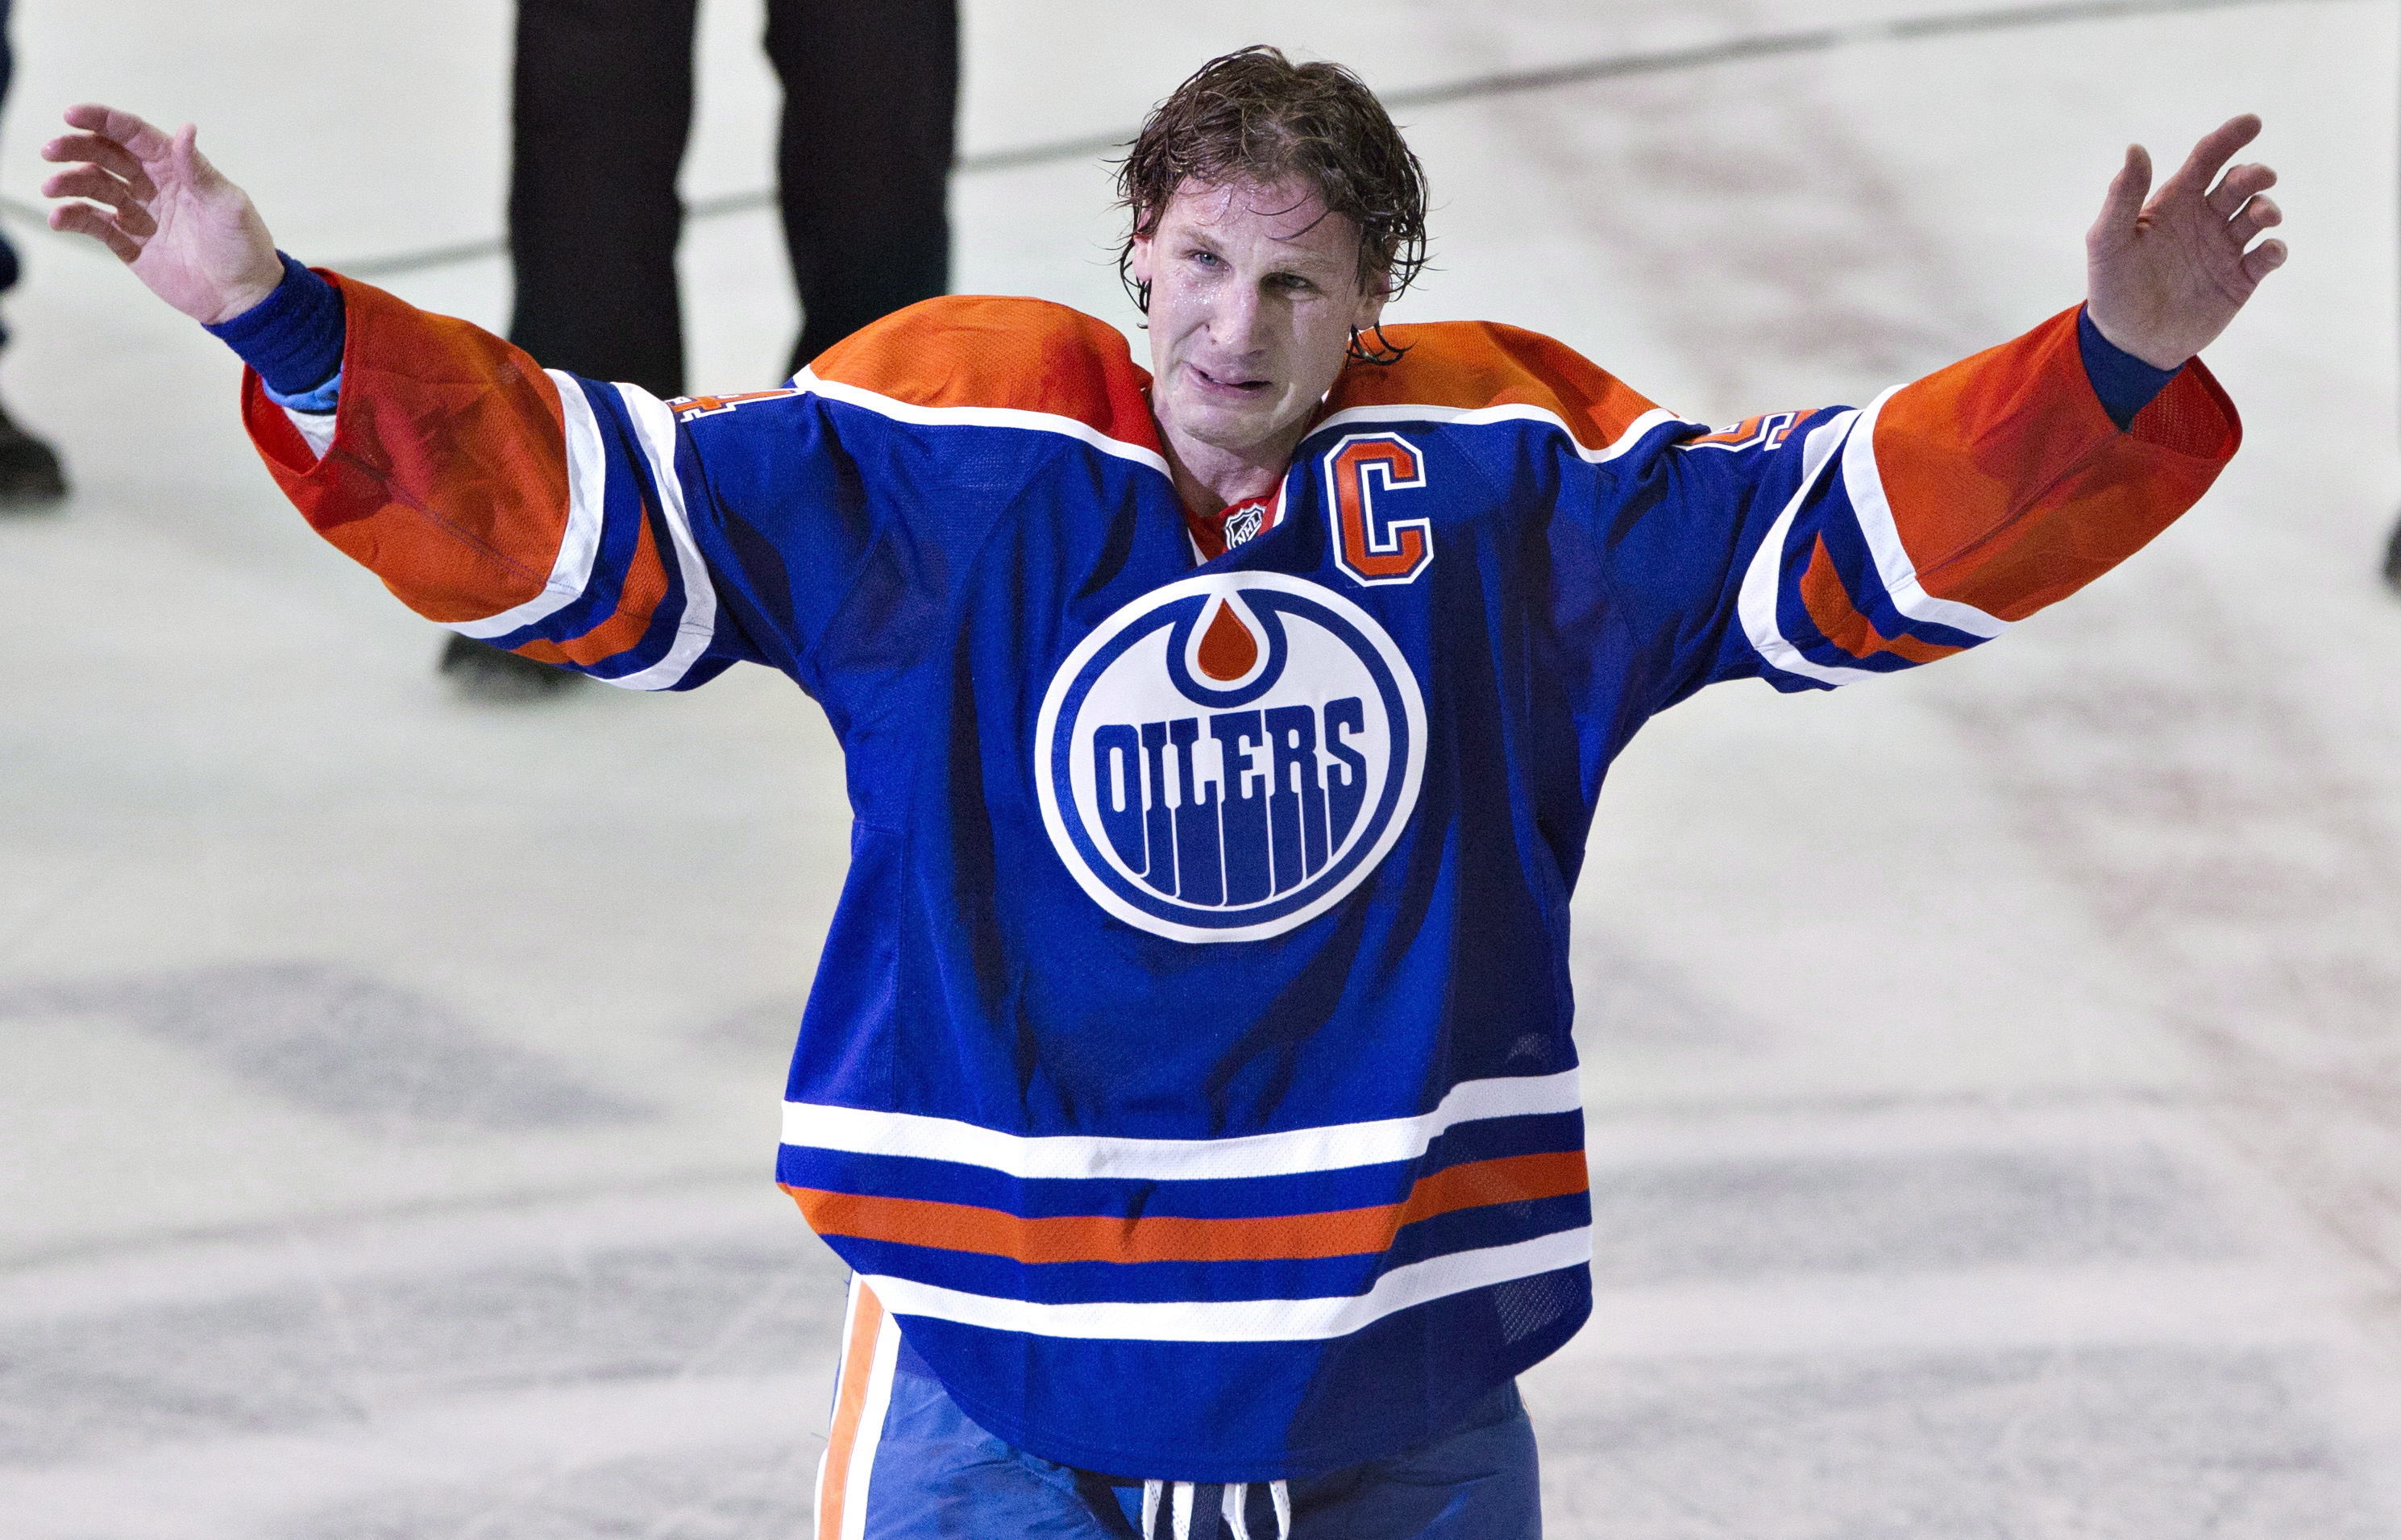 Each NHL Team's Biggest Character: Edmonton Oilers, Ryan Smyth